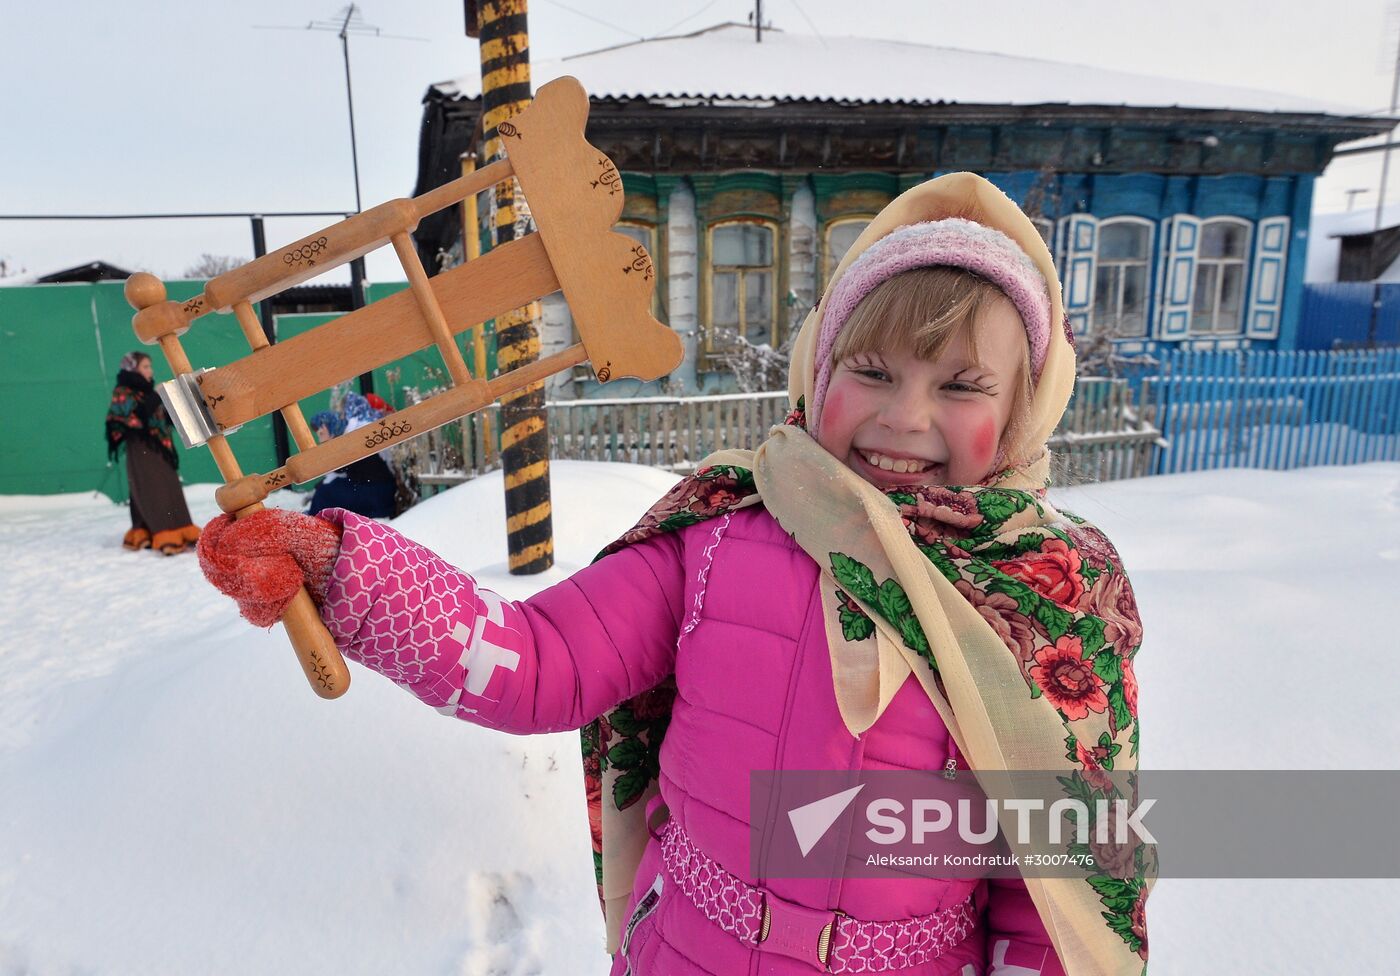 Christmas fortune telling and carol singing in Chelyabinsk Region